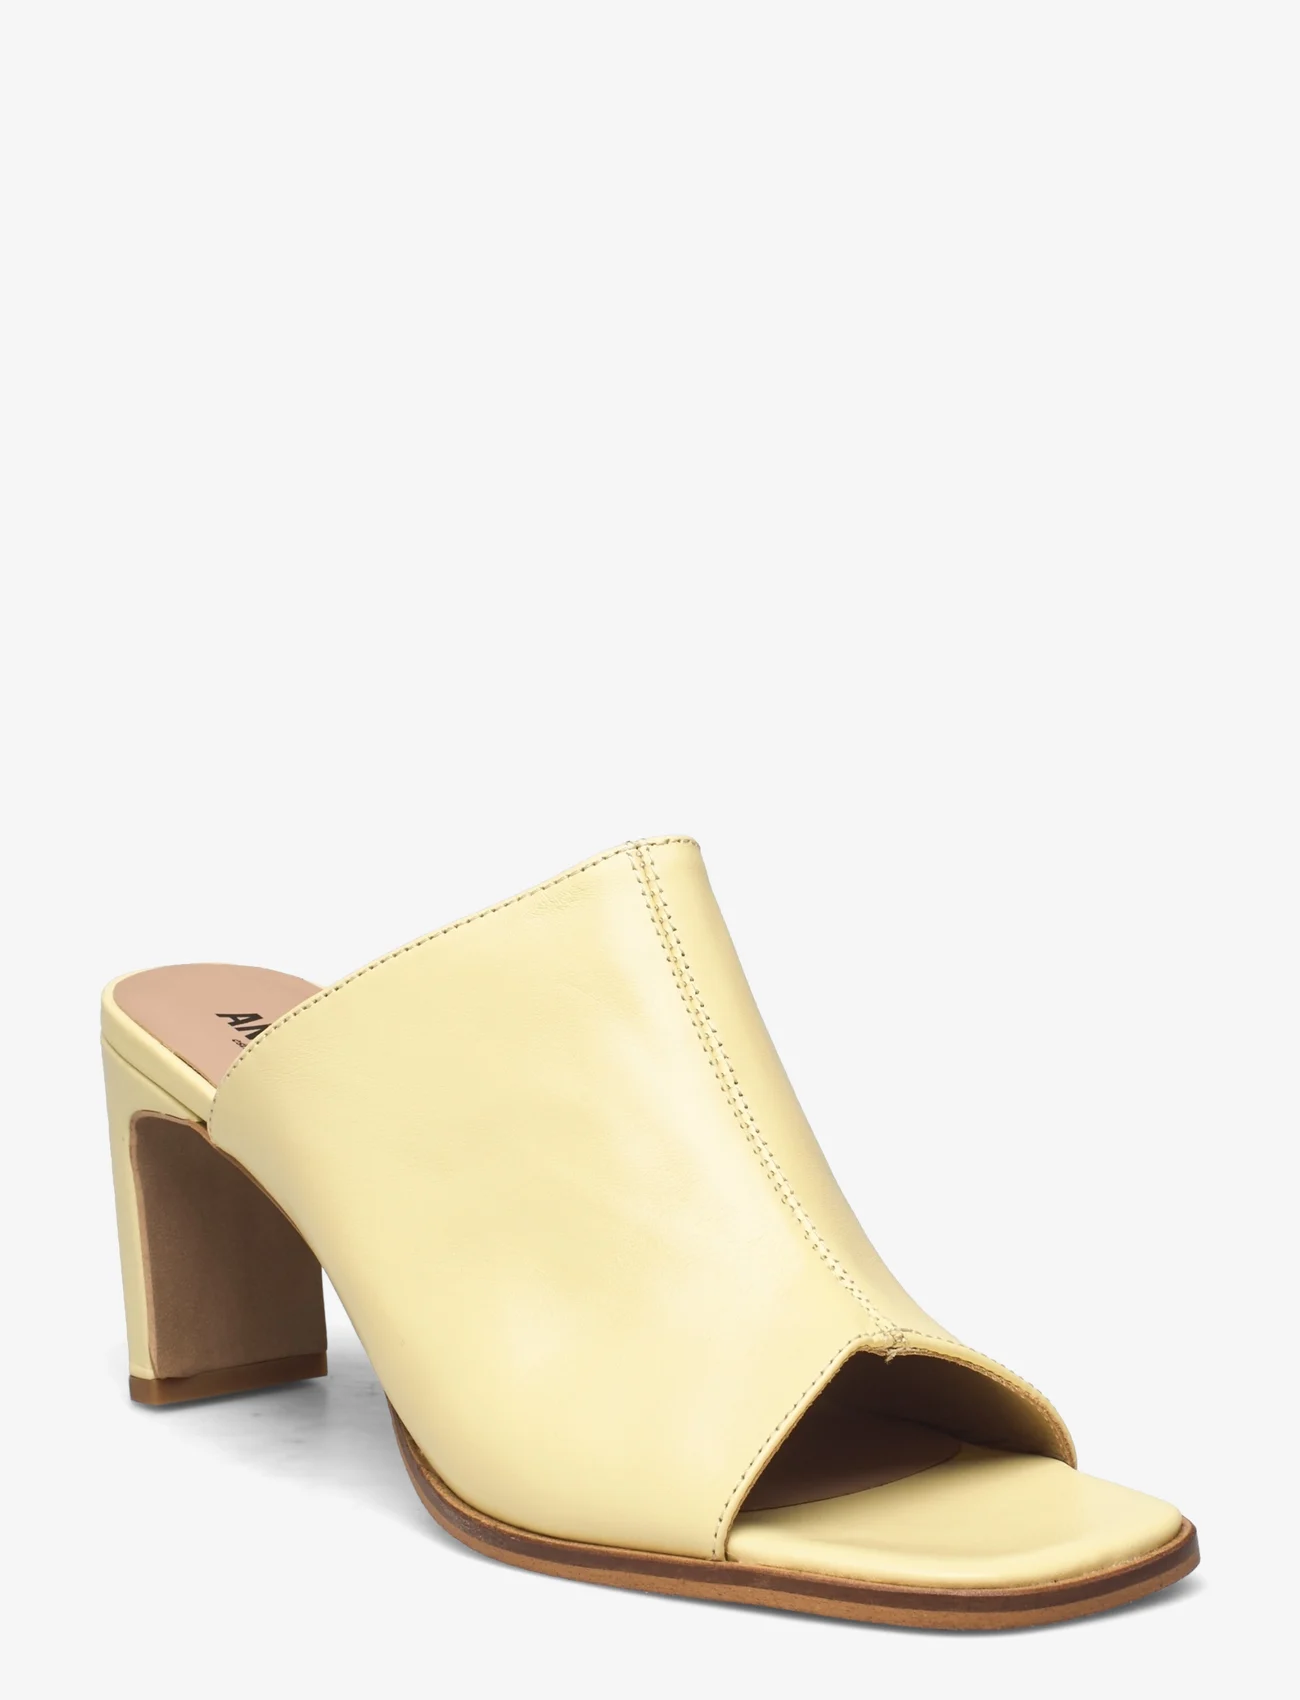 ANGULUS - Sandals - Block heels - slipons med hæl - 1495 light yellow - 0